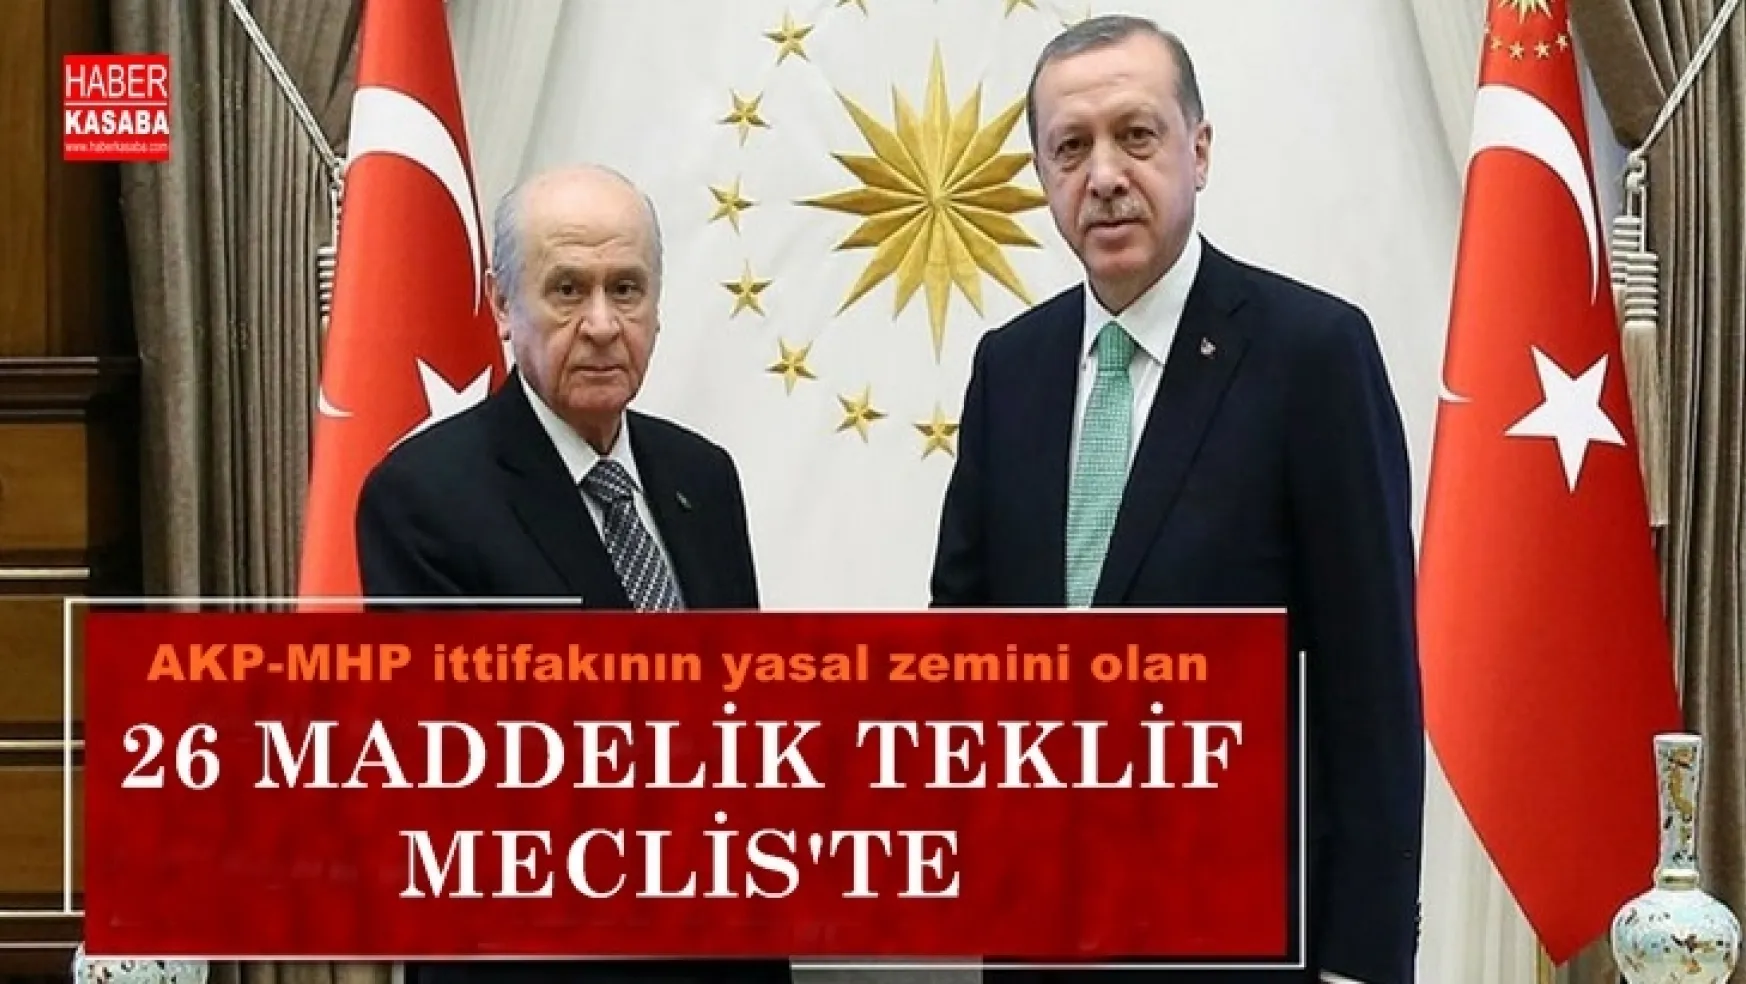 AKP-MHP ittifakının 26 maddelik  teklifi Meclis'te